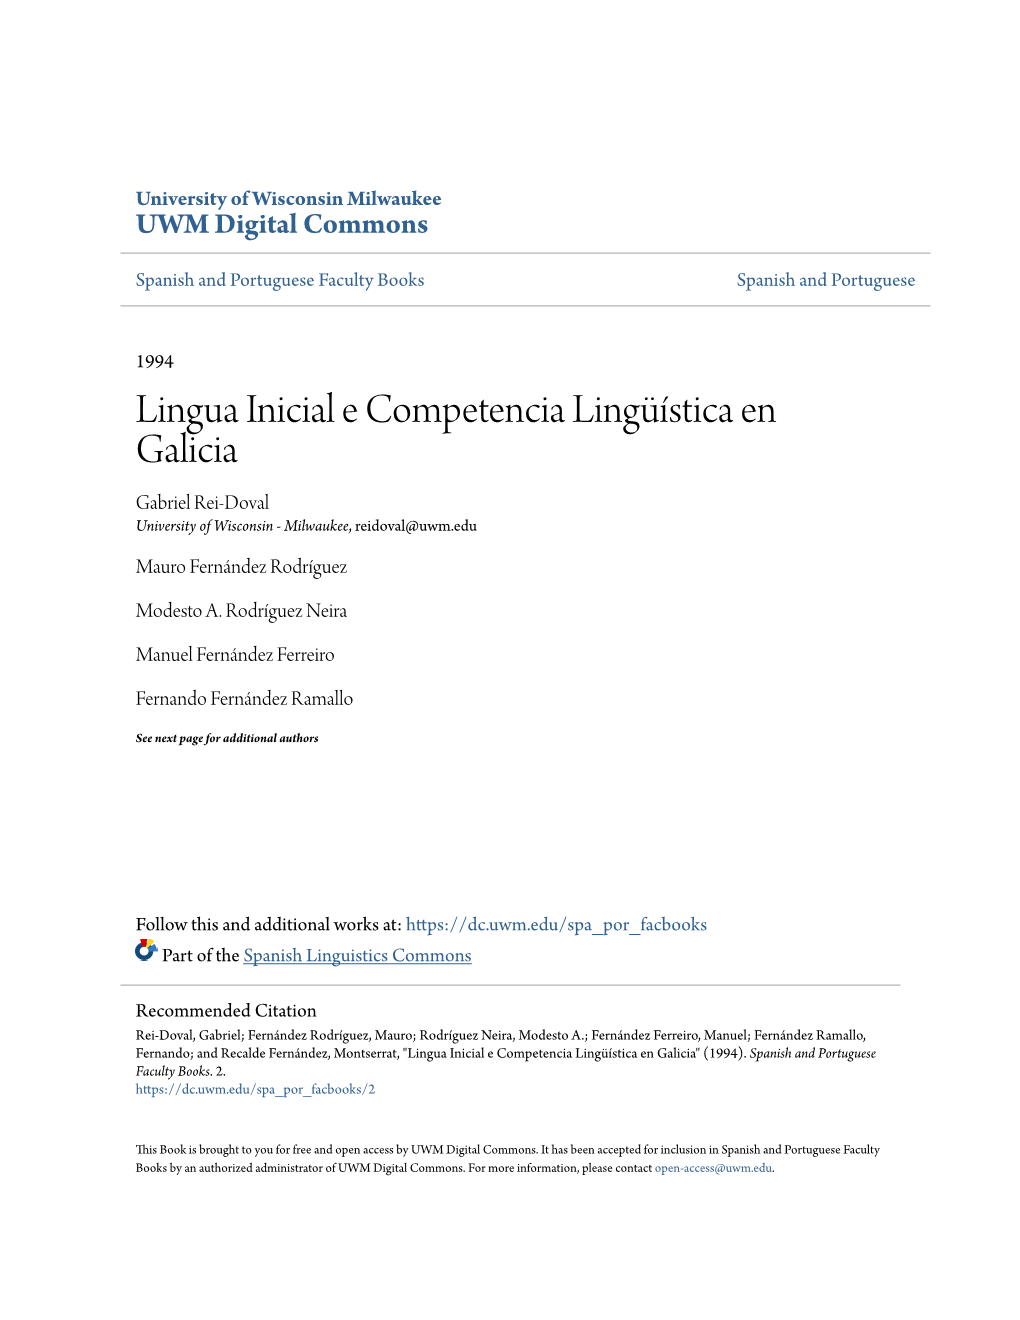 Lingua Inicial E Competencia Lingüística En Galicia Gabriel Rei-Doval University of Wisconsin - Milwaukee, Reidoval@Uwm.Edu